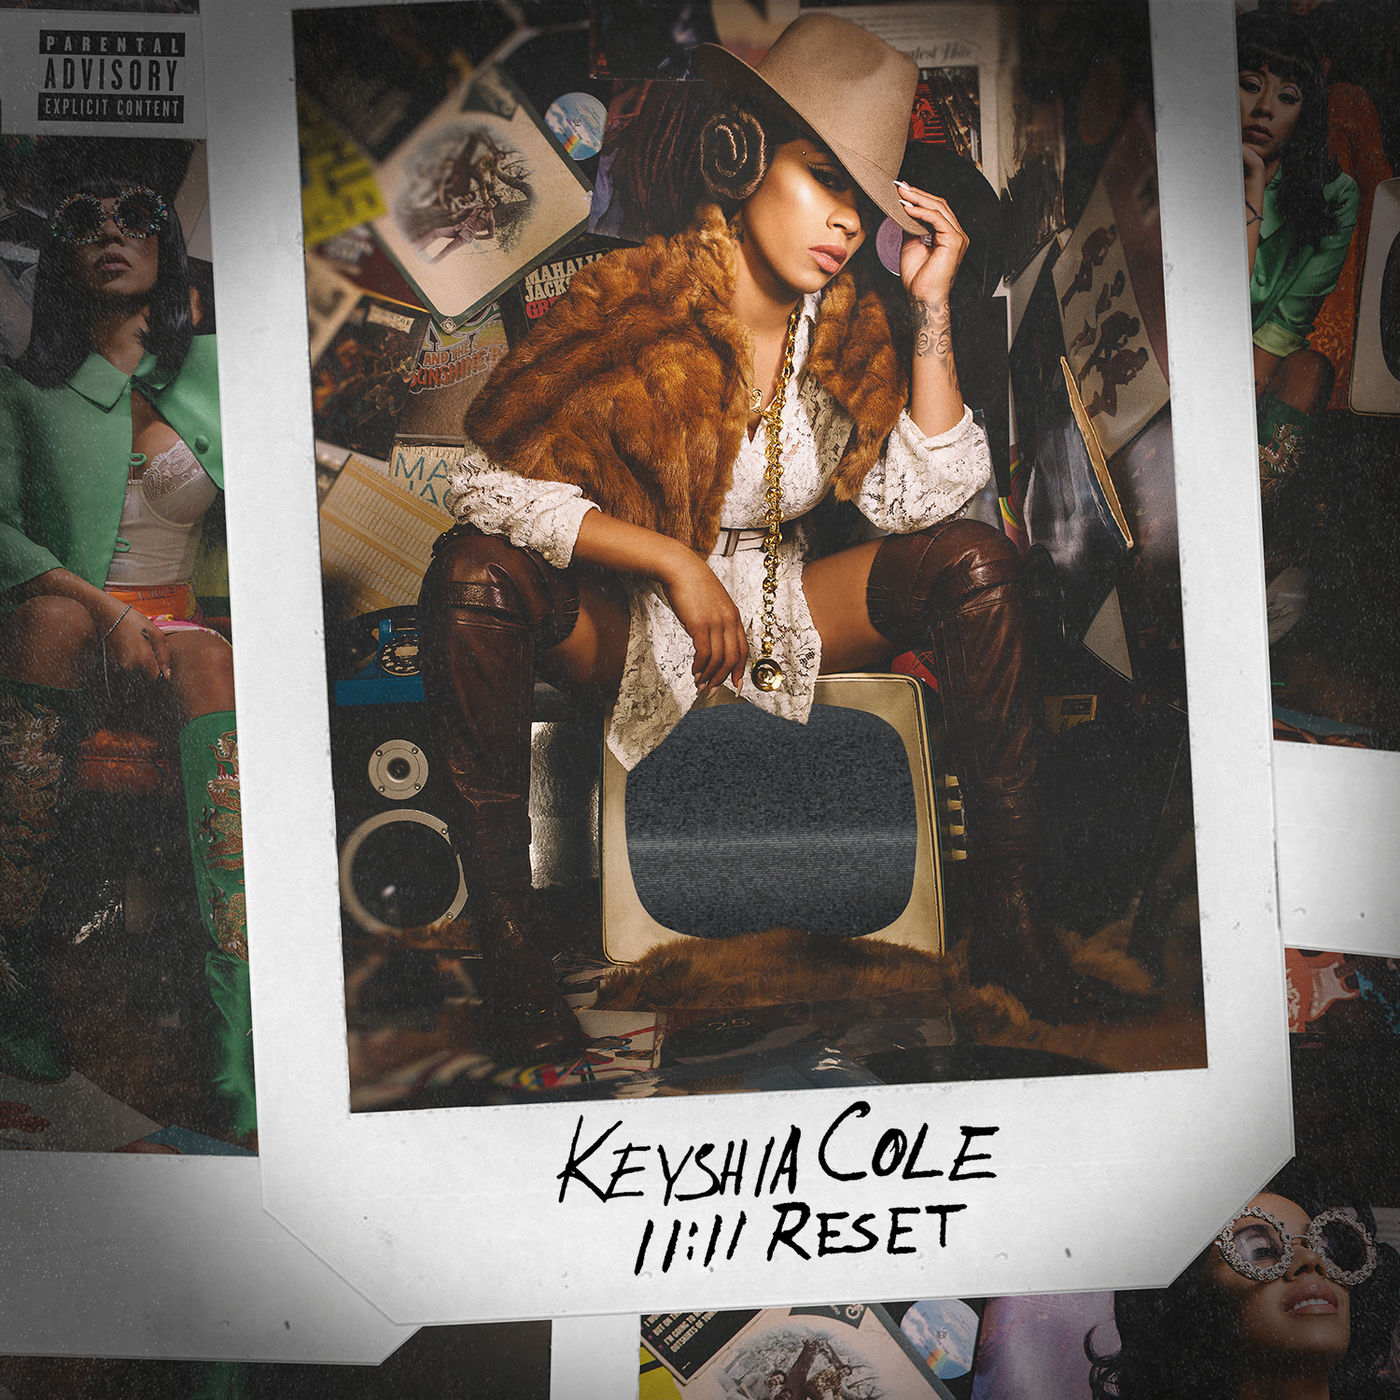 Keyshia Cole – 1111 Reset